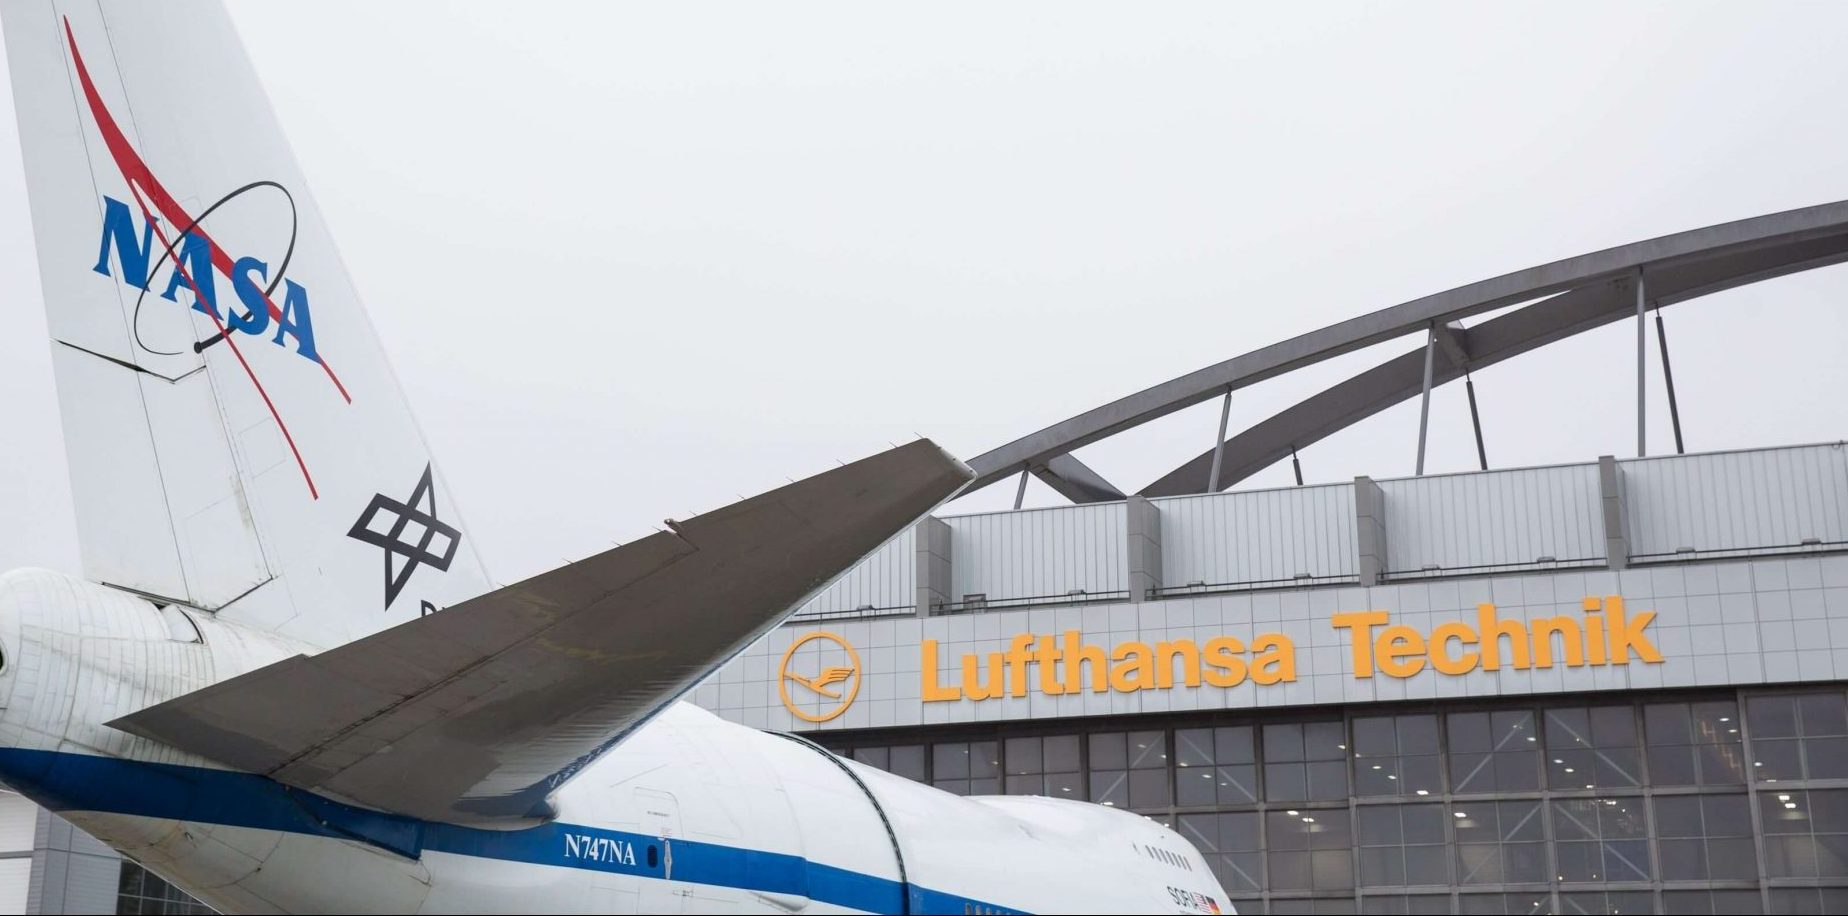 Lufthansa Technik grows in 2017